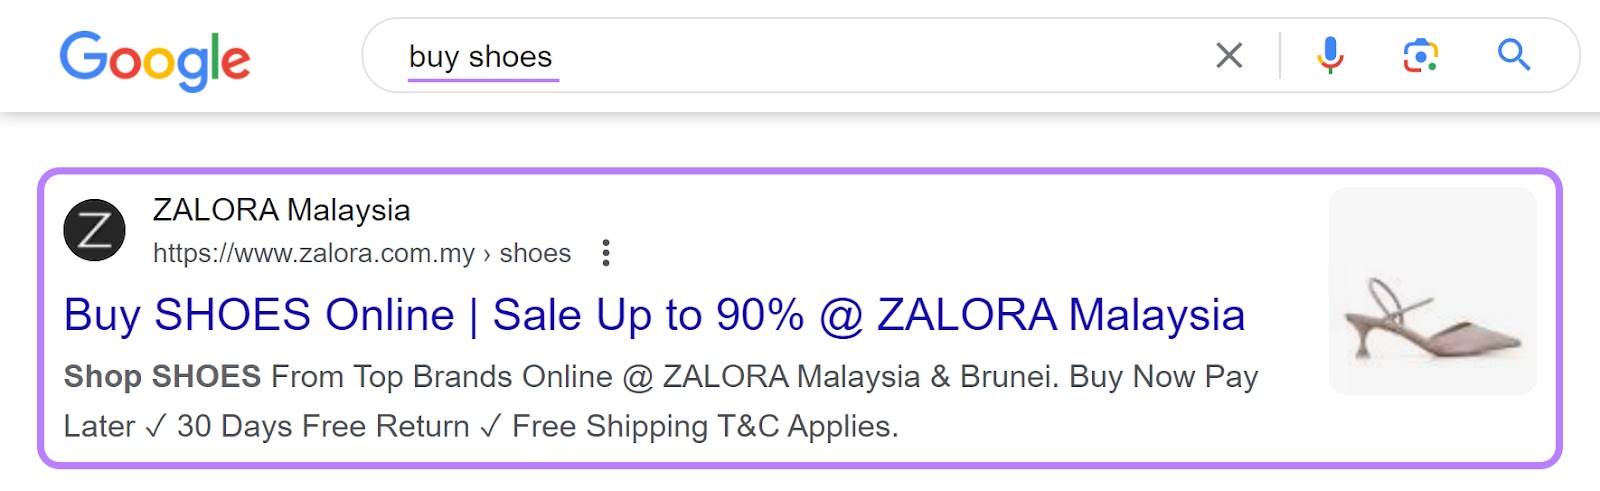 Zalora's PPC ad for "buy shoes" keyword